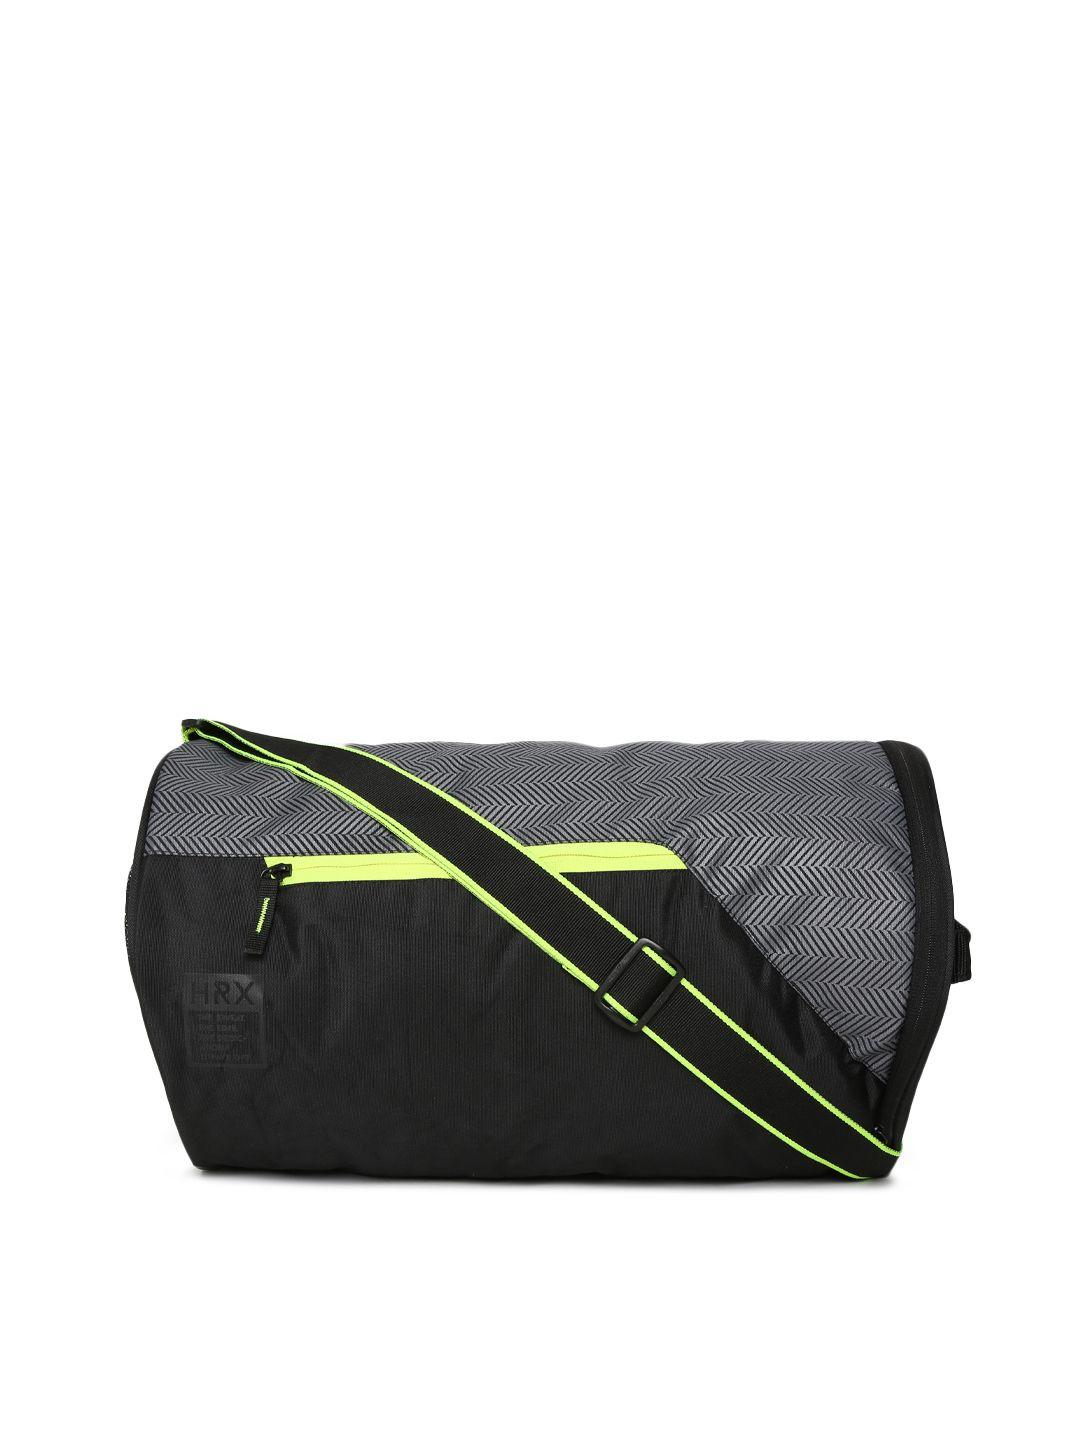 hrx by hrithik roshan unisex black & grey colourblocked training duffel bag